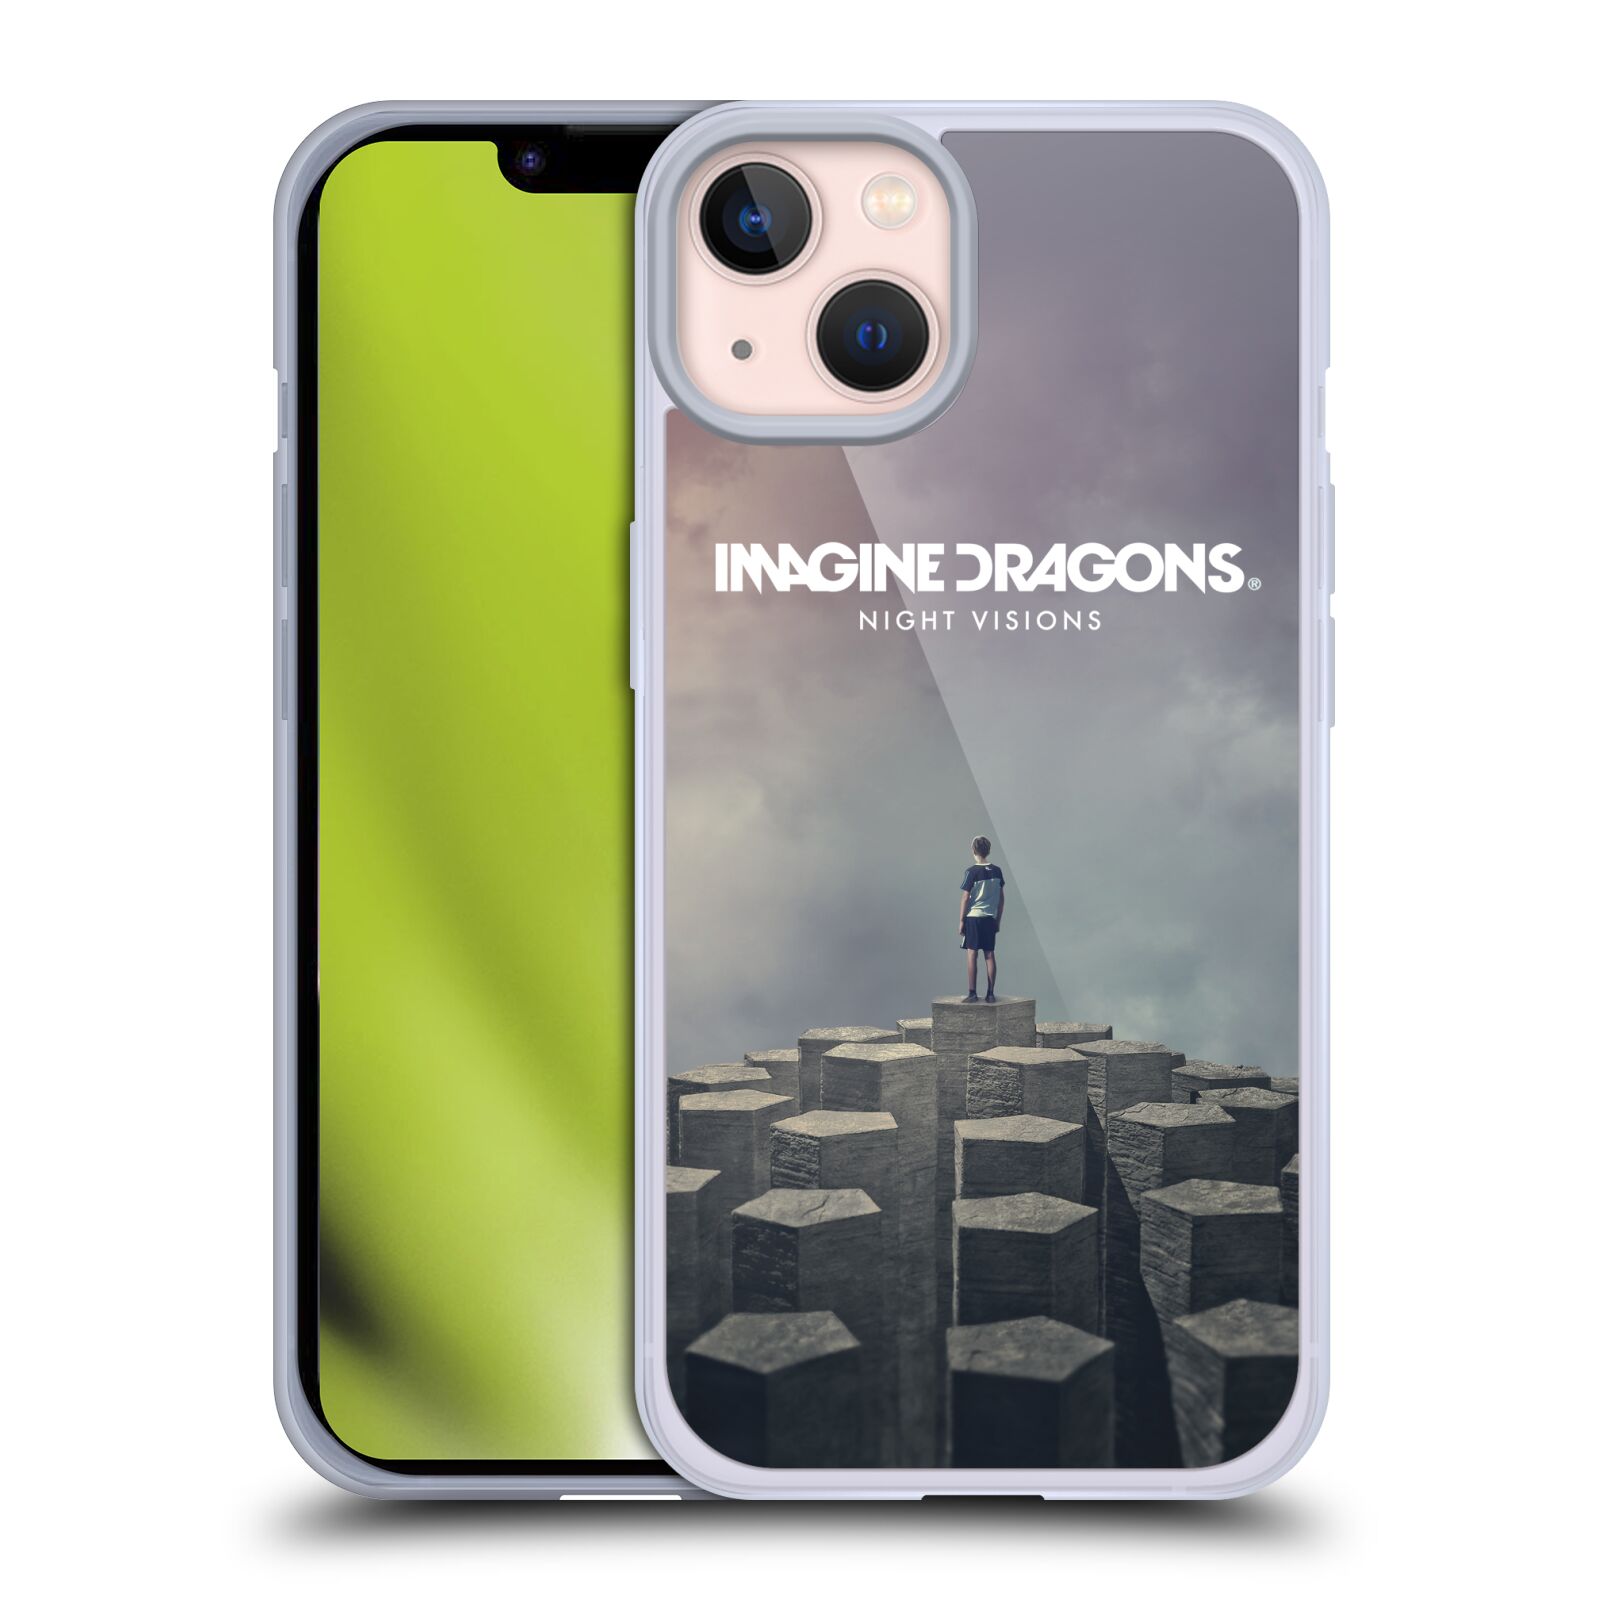 Silikonové pouzdro na mobil Apple iPhone 13 - Imagine Dragons - Night Visions (Silikonový kryt, obal, pouzdro na mobilní telefon Apple iPhone 13 s licencovaným motivem Imagine Dragons - Night Visions)